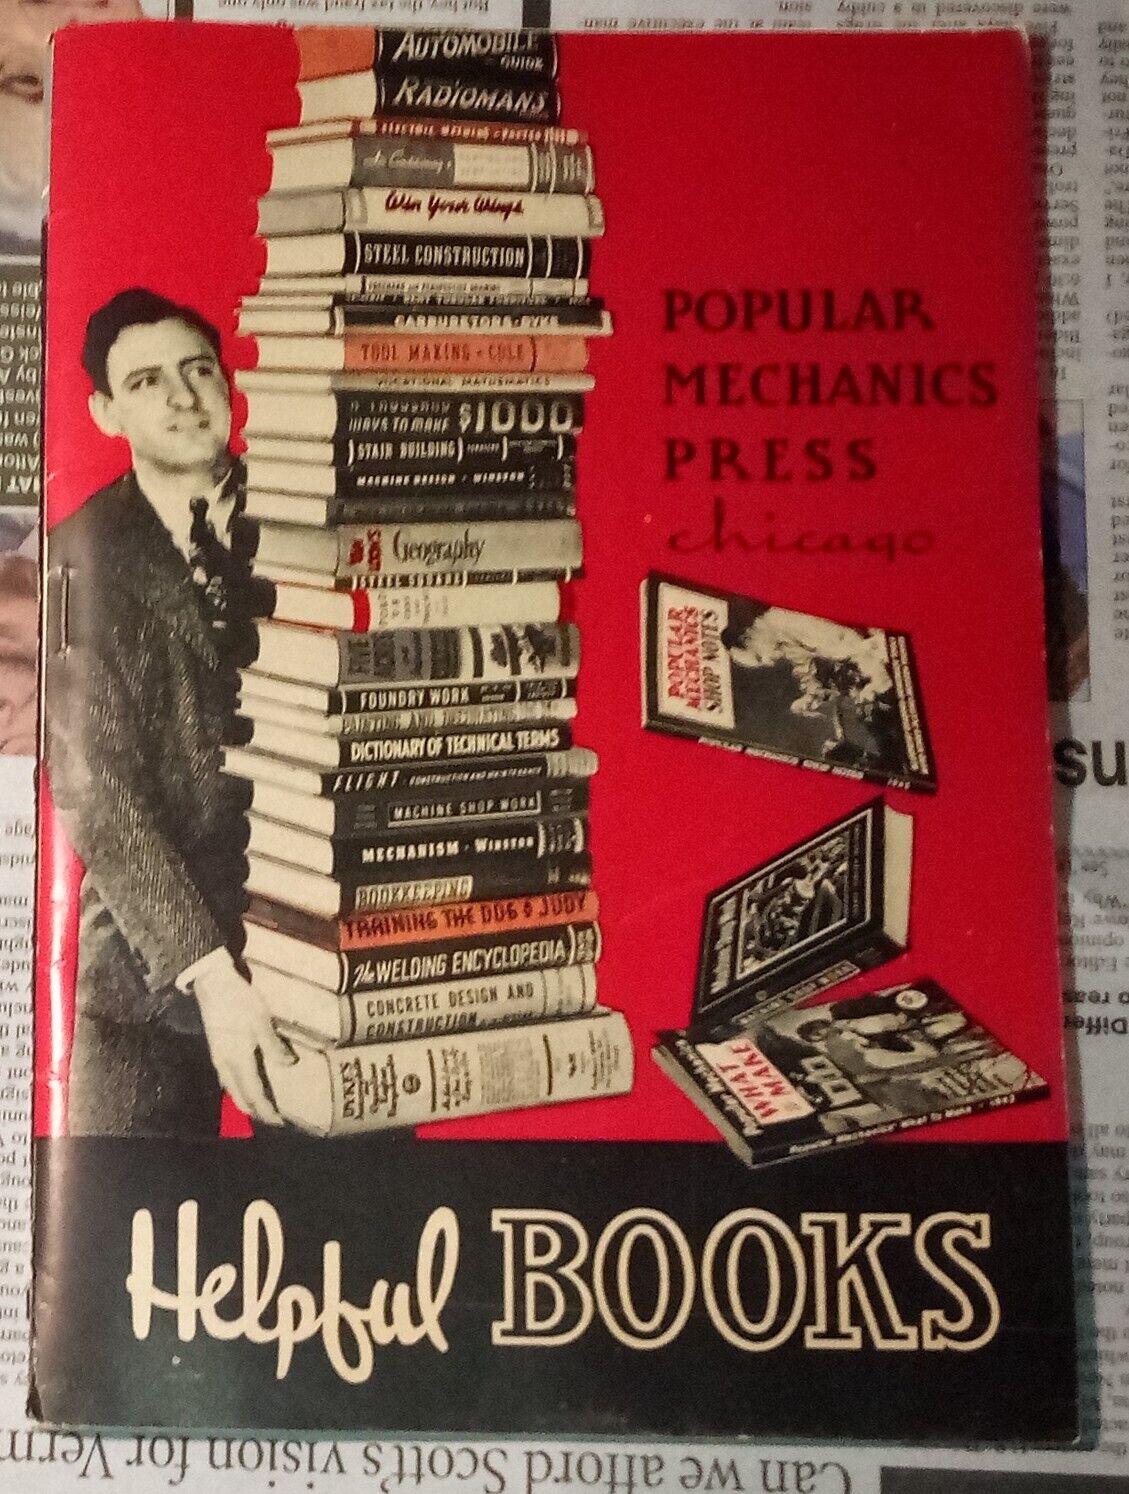 Popular Mechanics Press, Chicago - c. 1940s Catalog